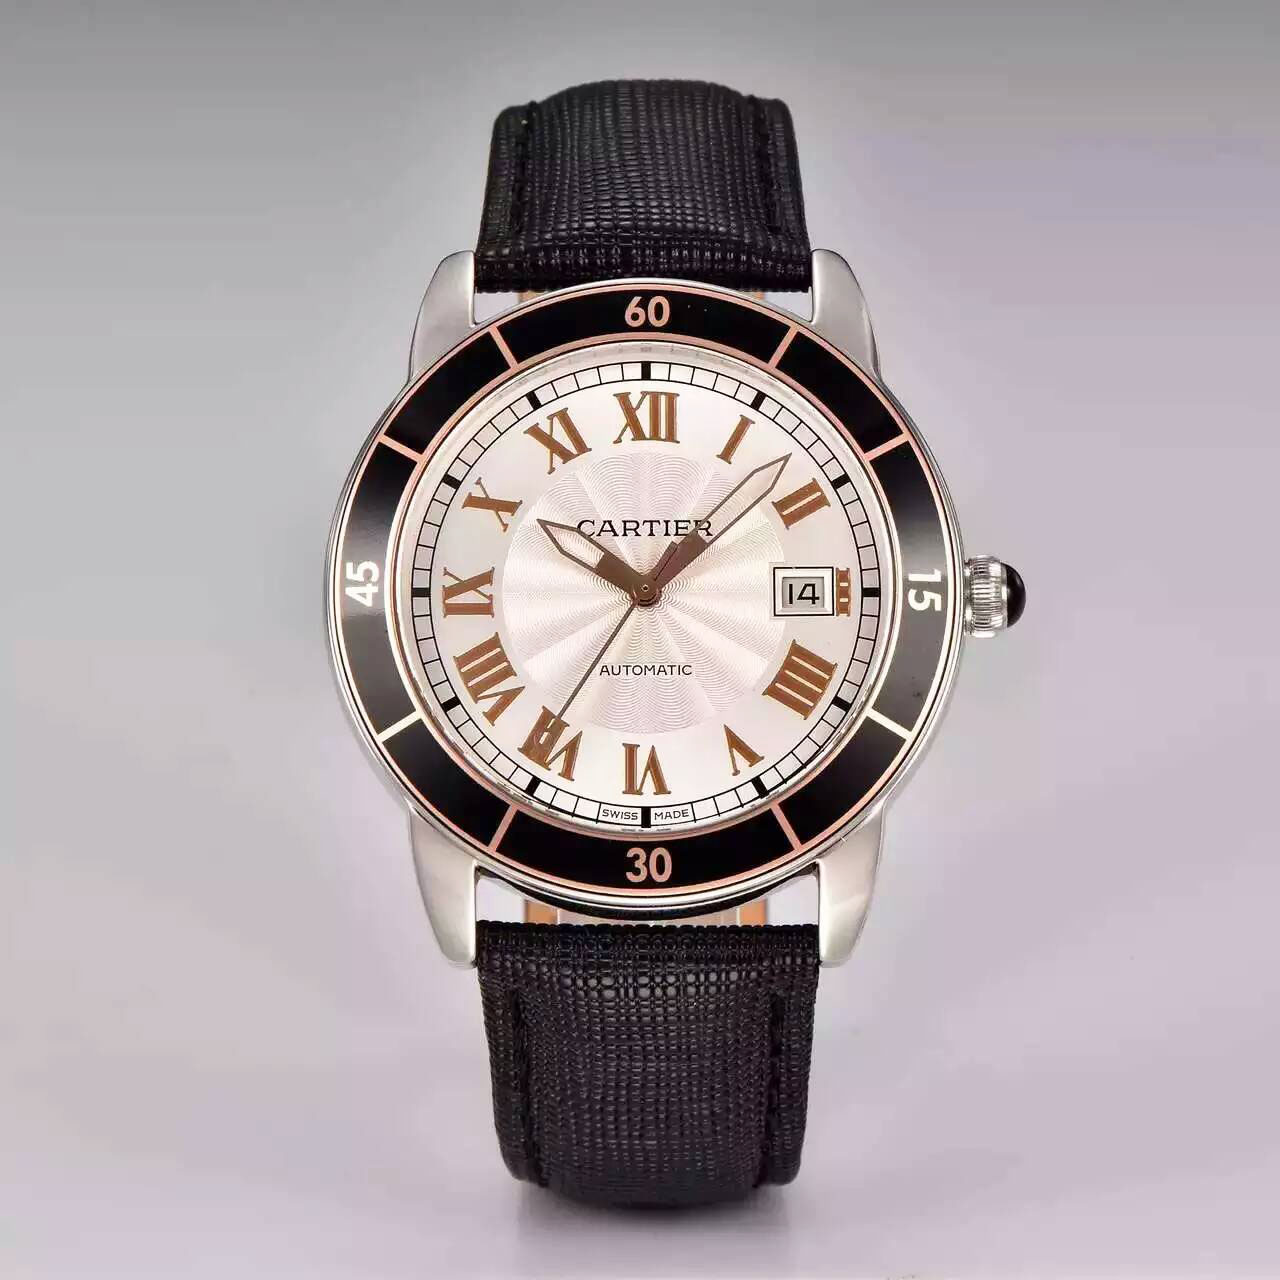 3A卡地亞 Cartier 入門級大三針腕錶 「Ronde Croisiere」 搭載9015機芯 Cartier標志性元素